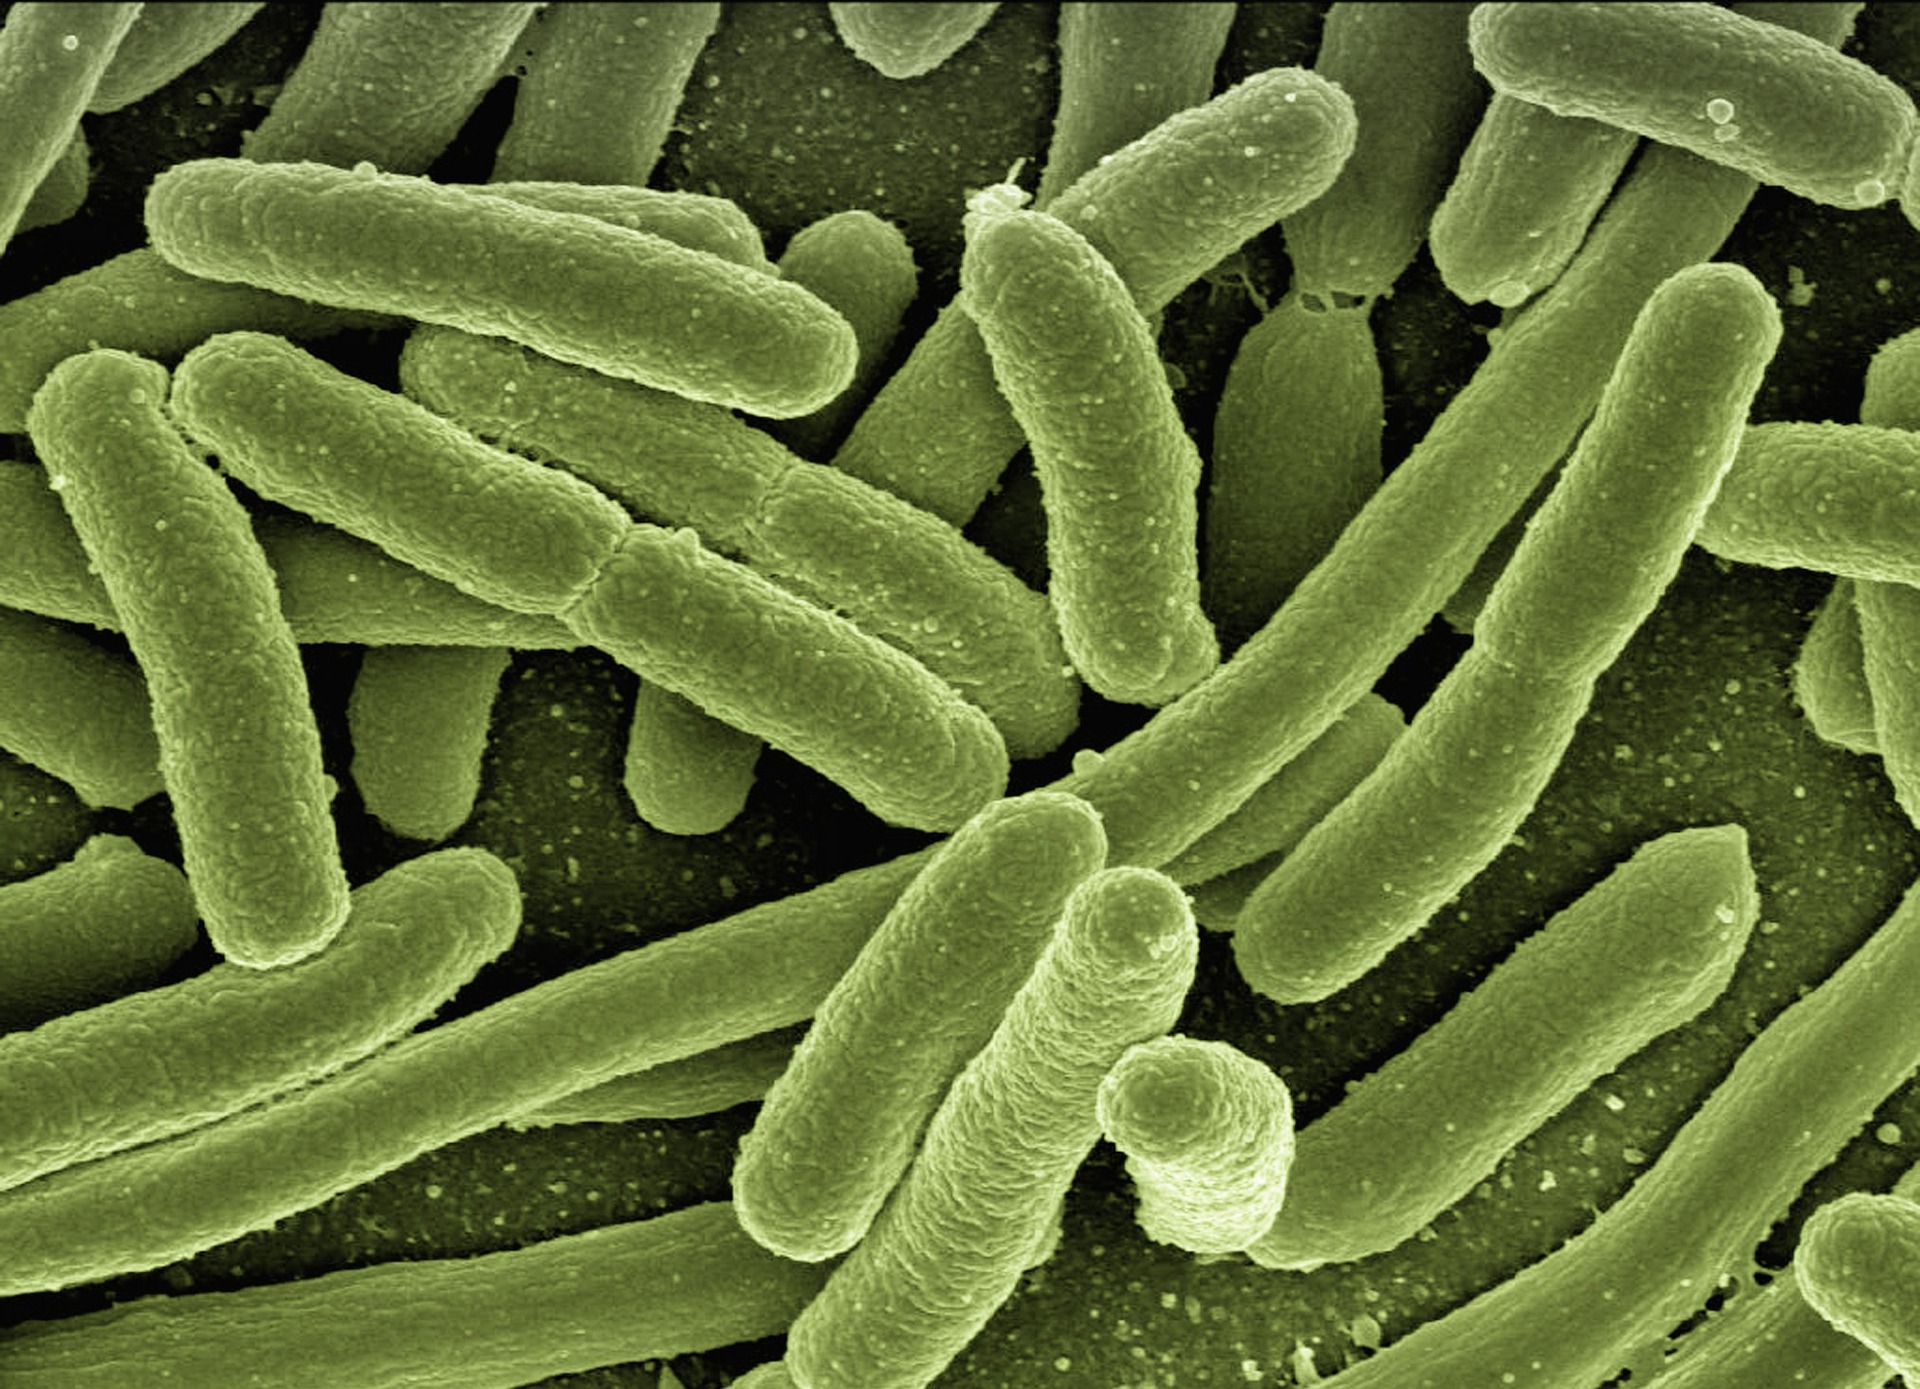 Mikrobiomforschung